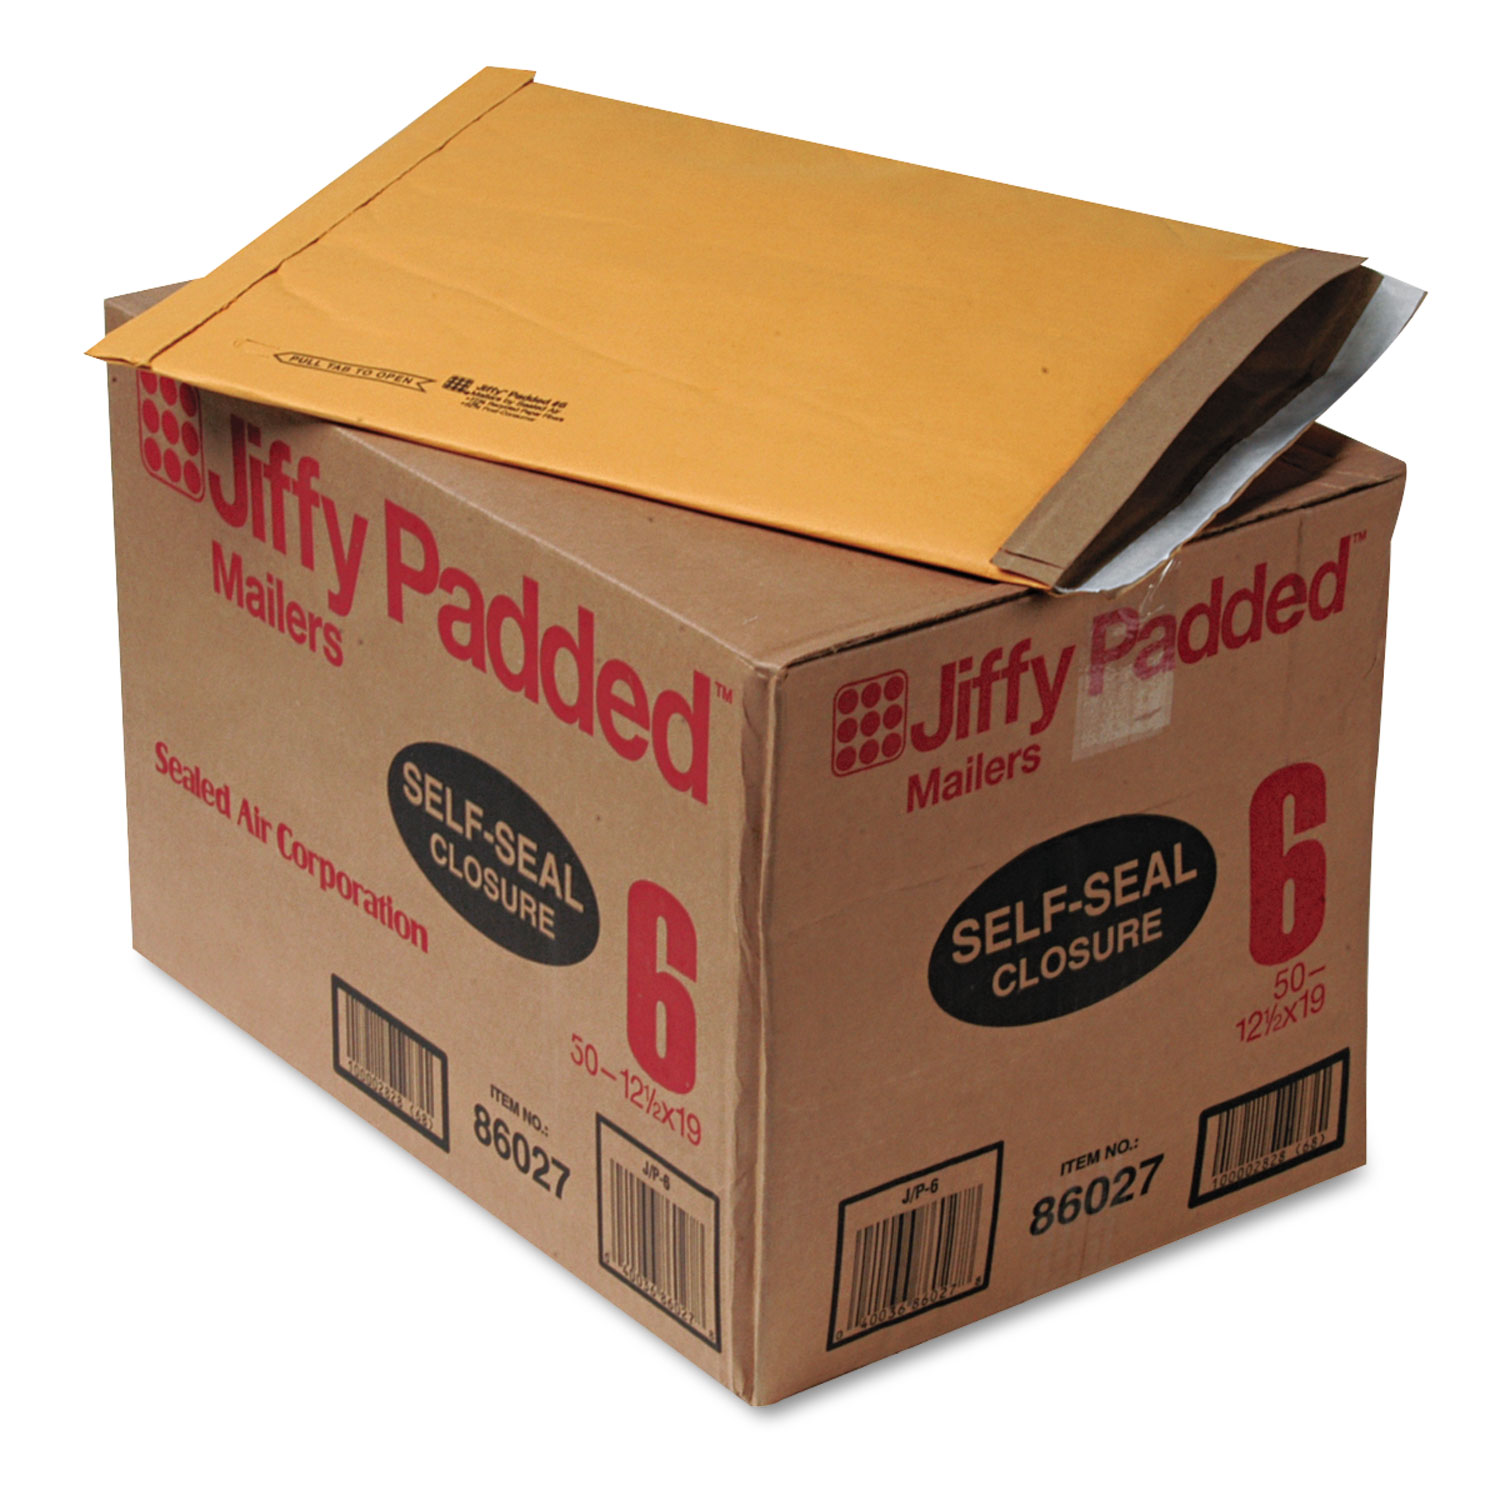  Sealed Air 64371 Jiffy Padded Mailer, #6, Paper Lining, Self-Adhesive Closure, 12.5 x 19, Natural Kraft, 50/Carton (SEL64371) 